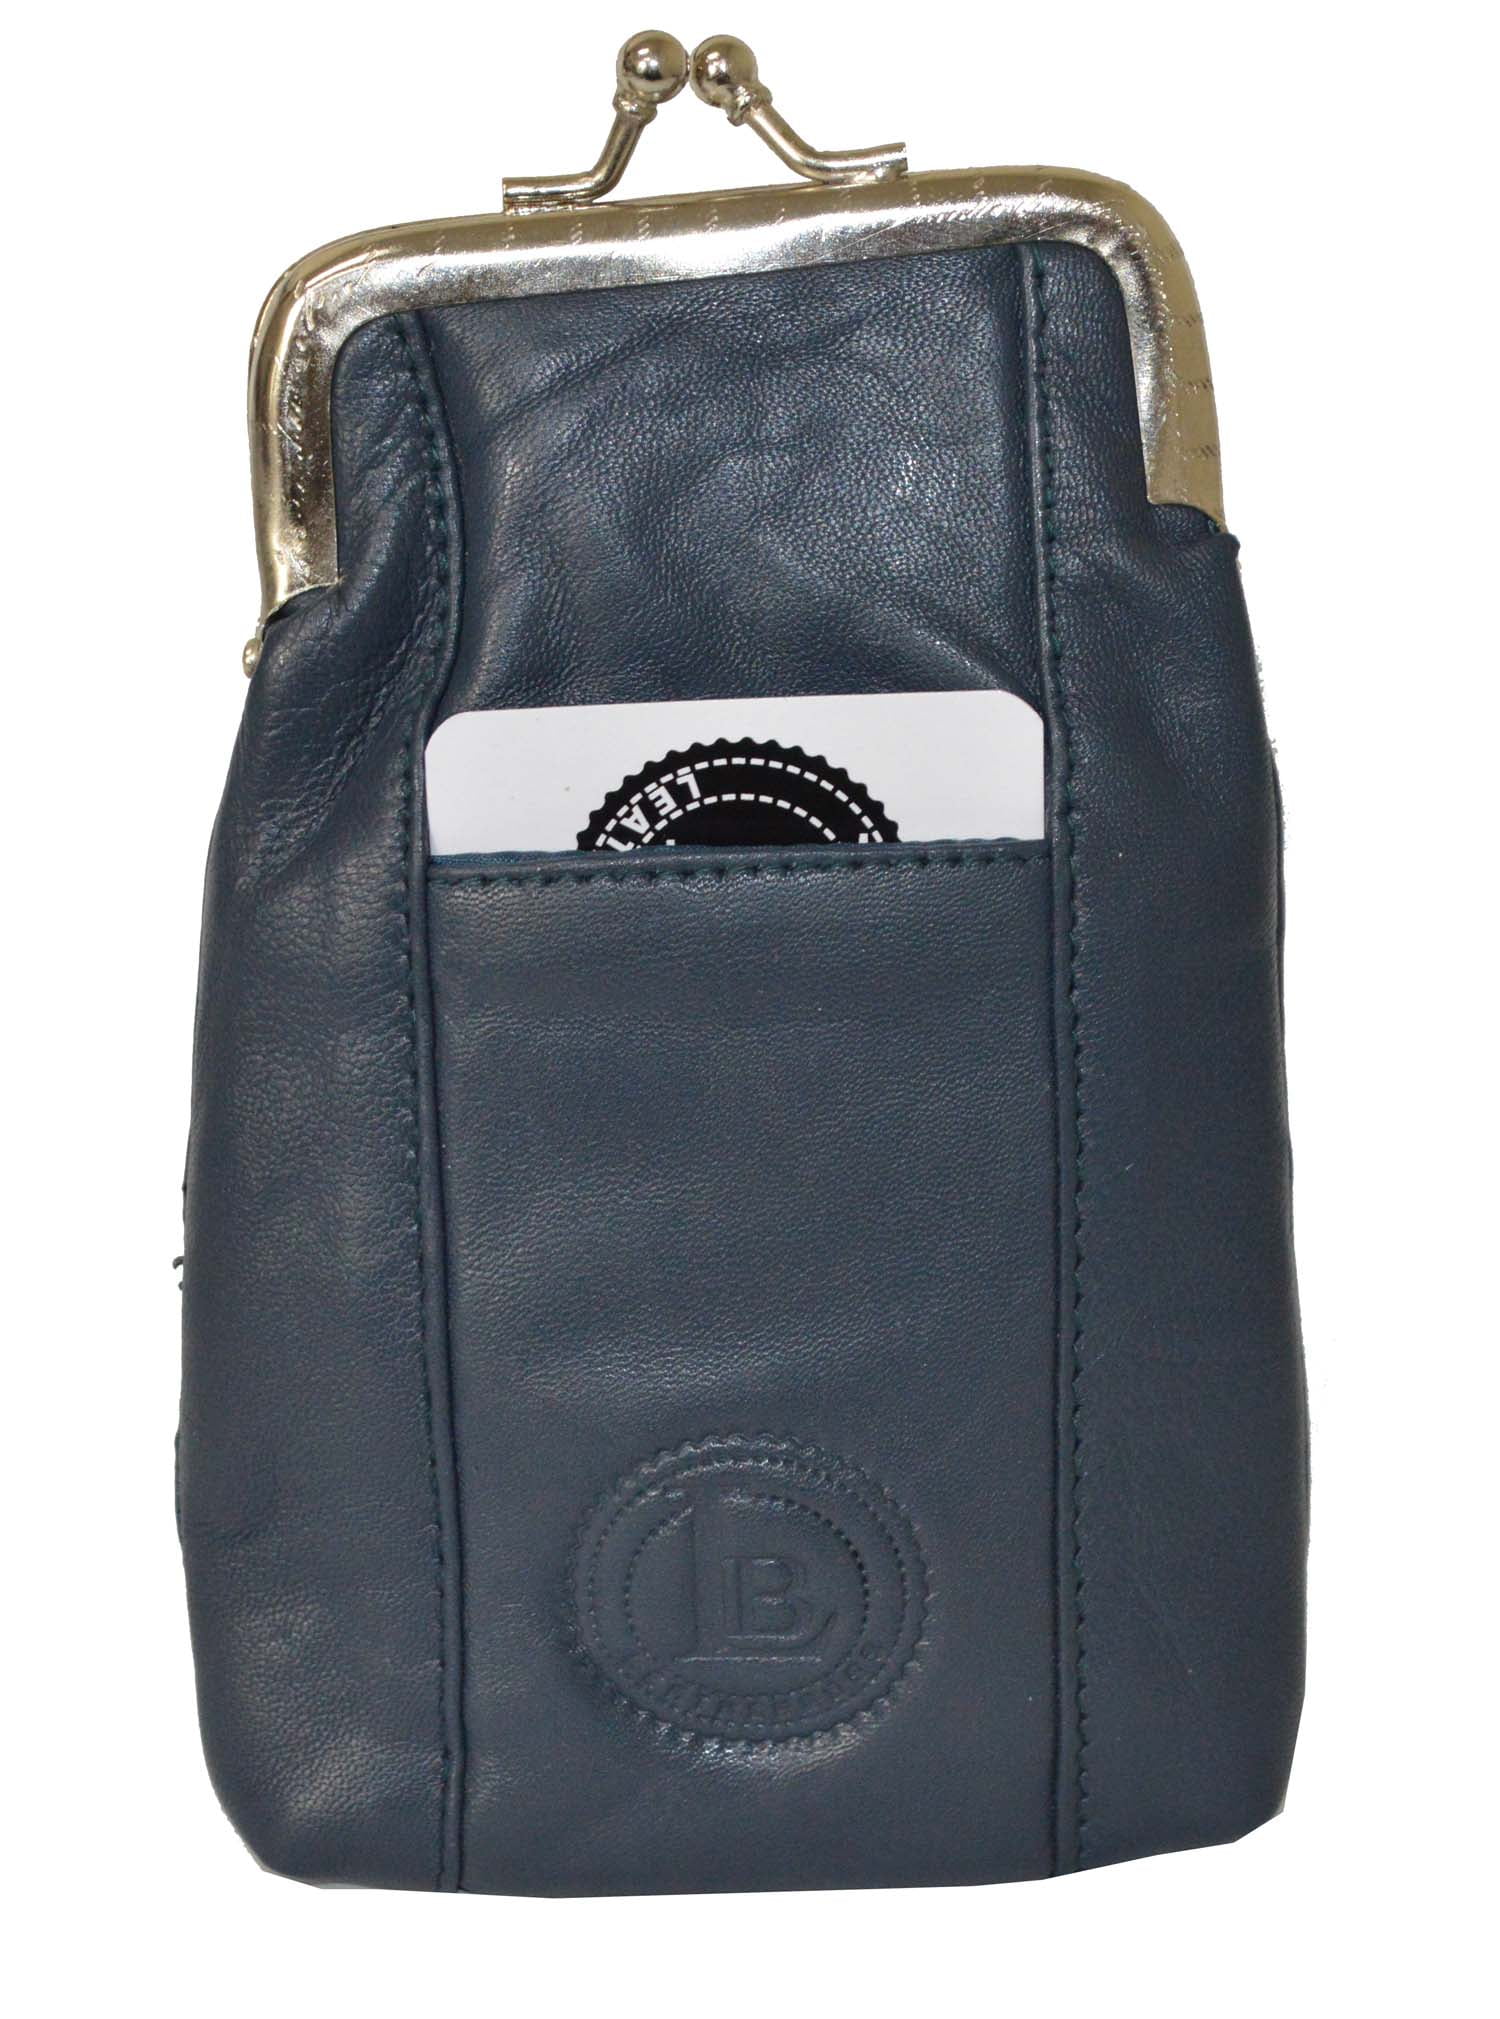 Leather Cigarette Case Pack Holder Navy Blue Regular or 100 s Lighter Pocket by Leatherboss 8e9e219f e88a 448a 88e3 0002b25b62db.369ff53d72c63321fdf872d845f1846c